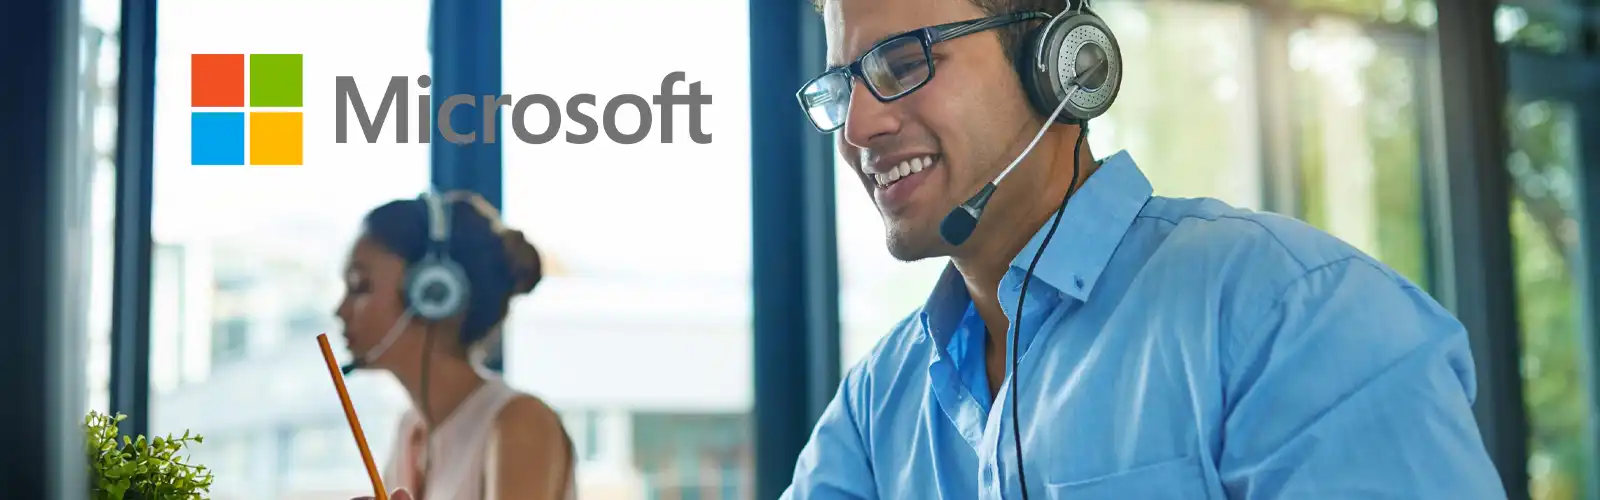 Microsoft-Customer-Service